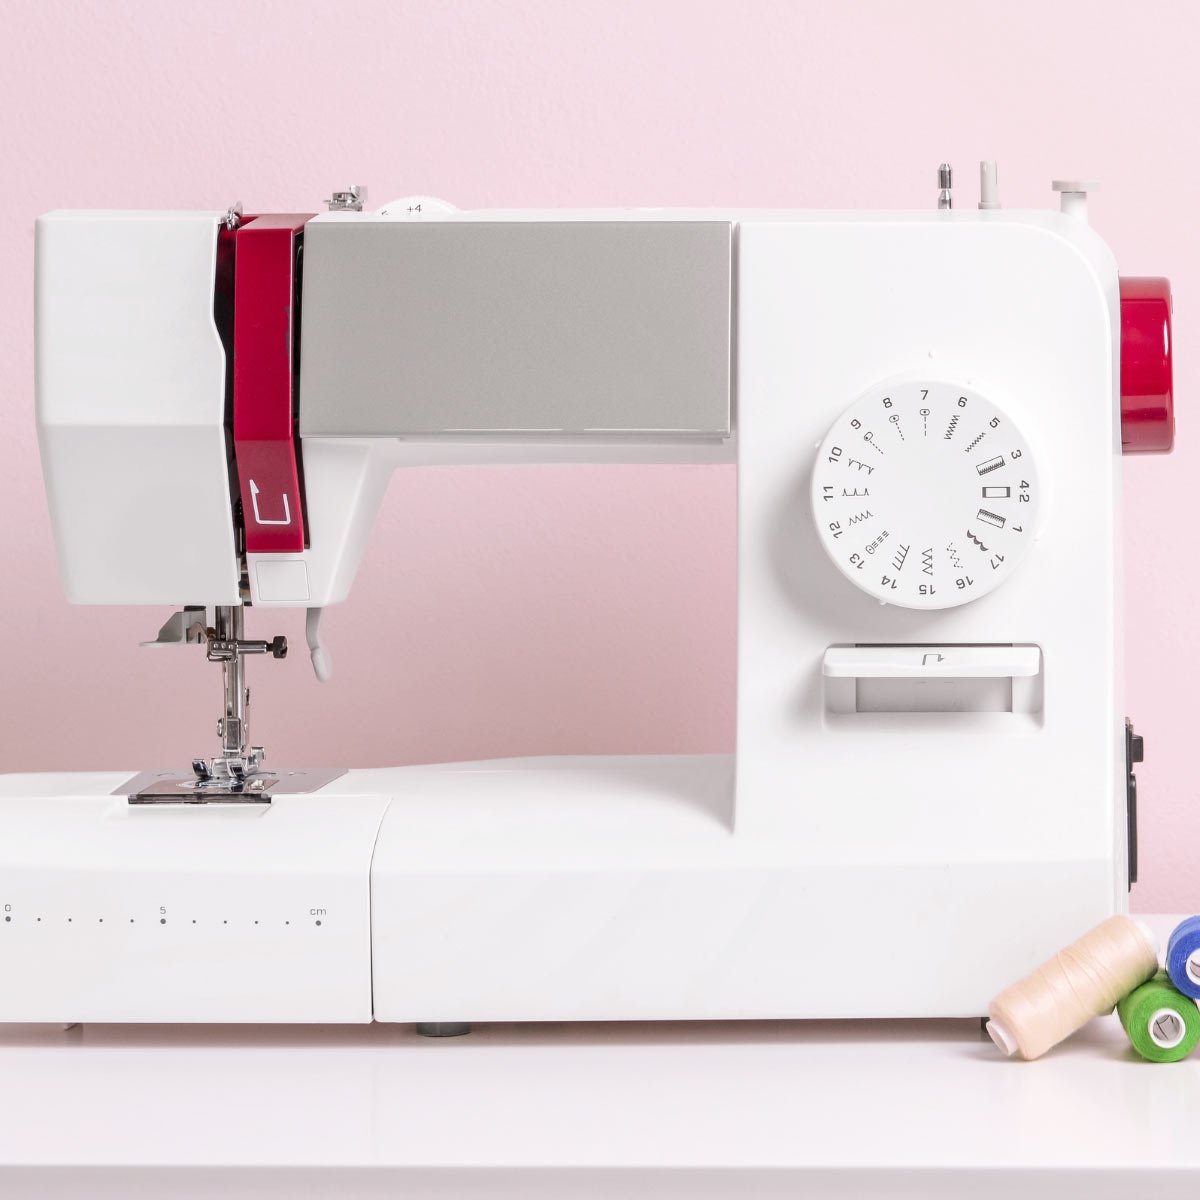 Sewing Machine Mock Flat-Lock Seam Tutorial - The Last Stitch